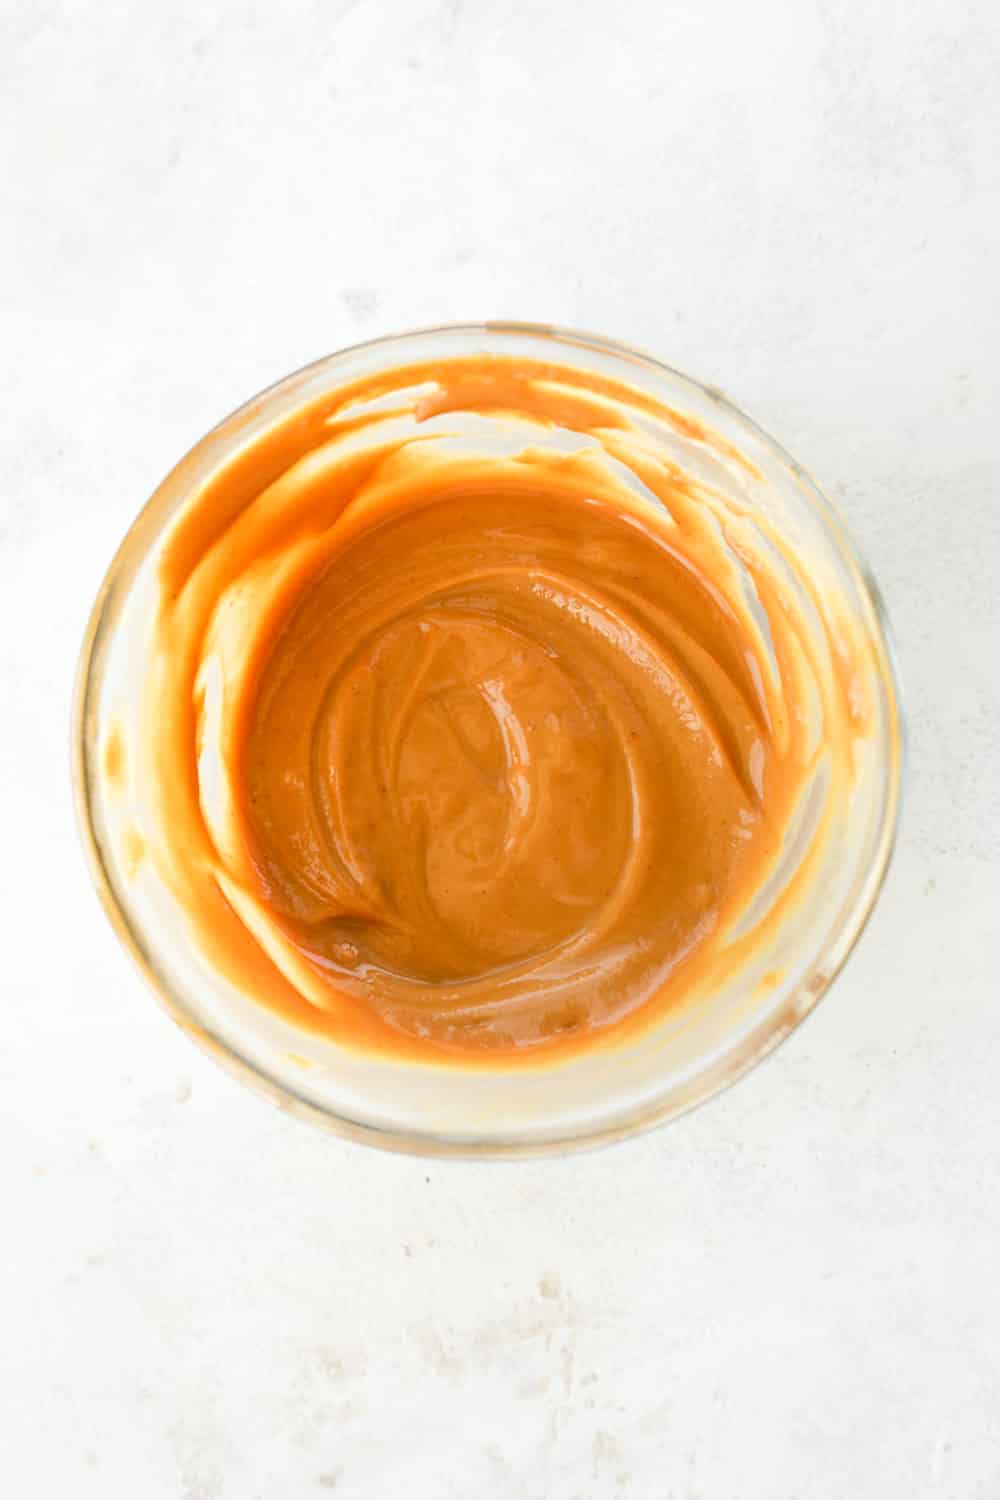 Low-calorie peanut butter in a glass jar.